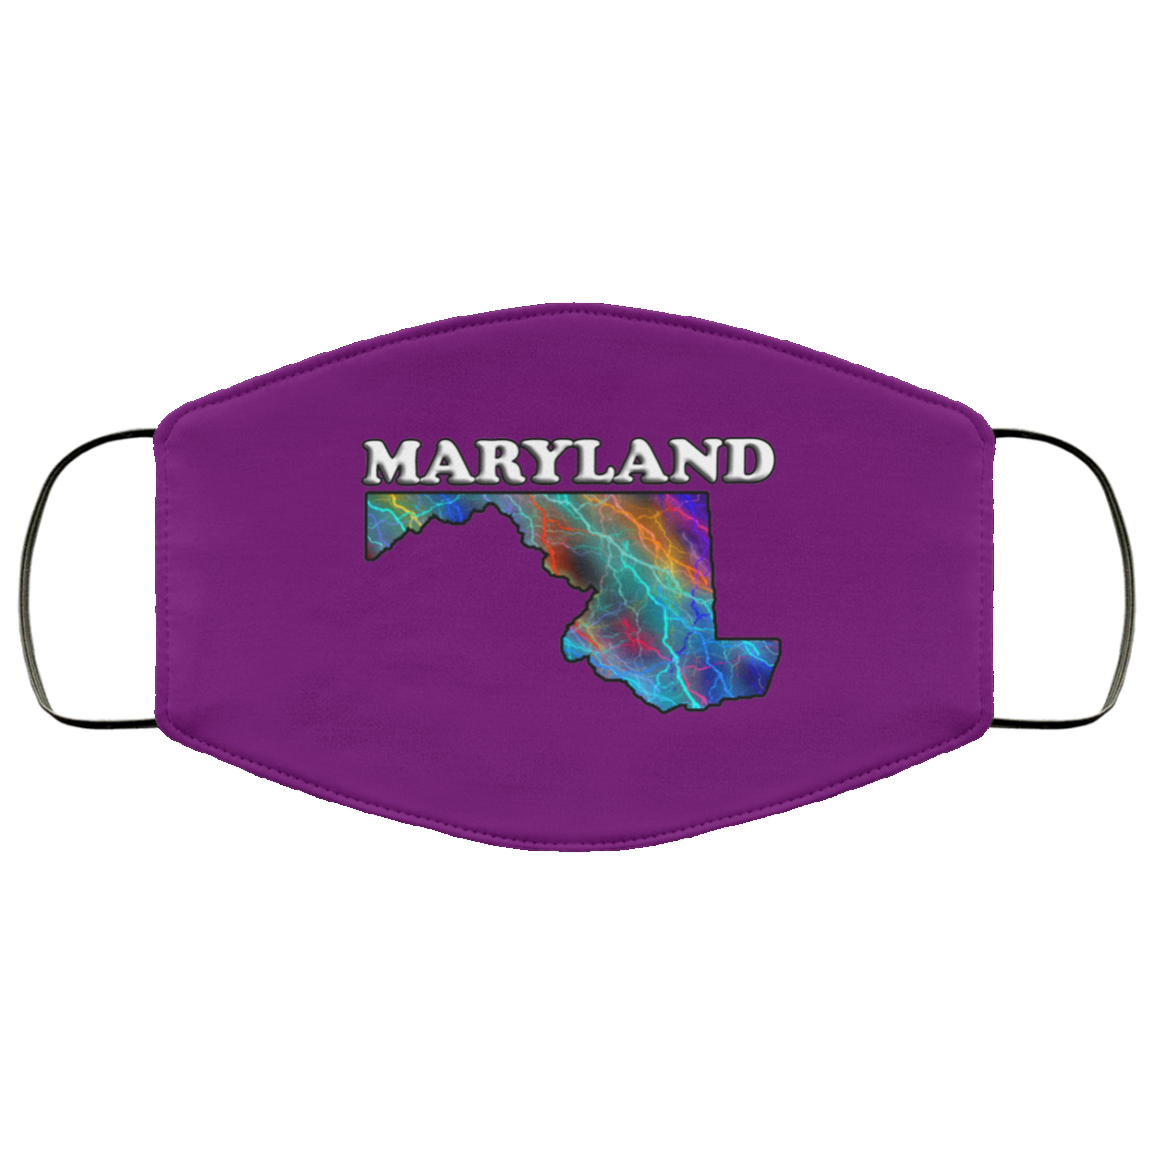 Maryland 2 Layer Mask